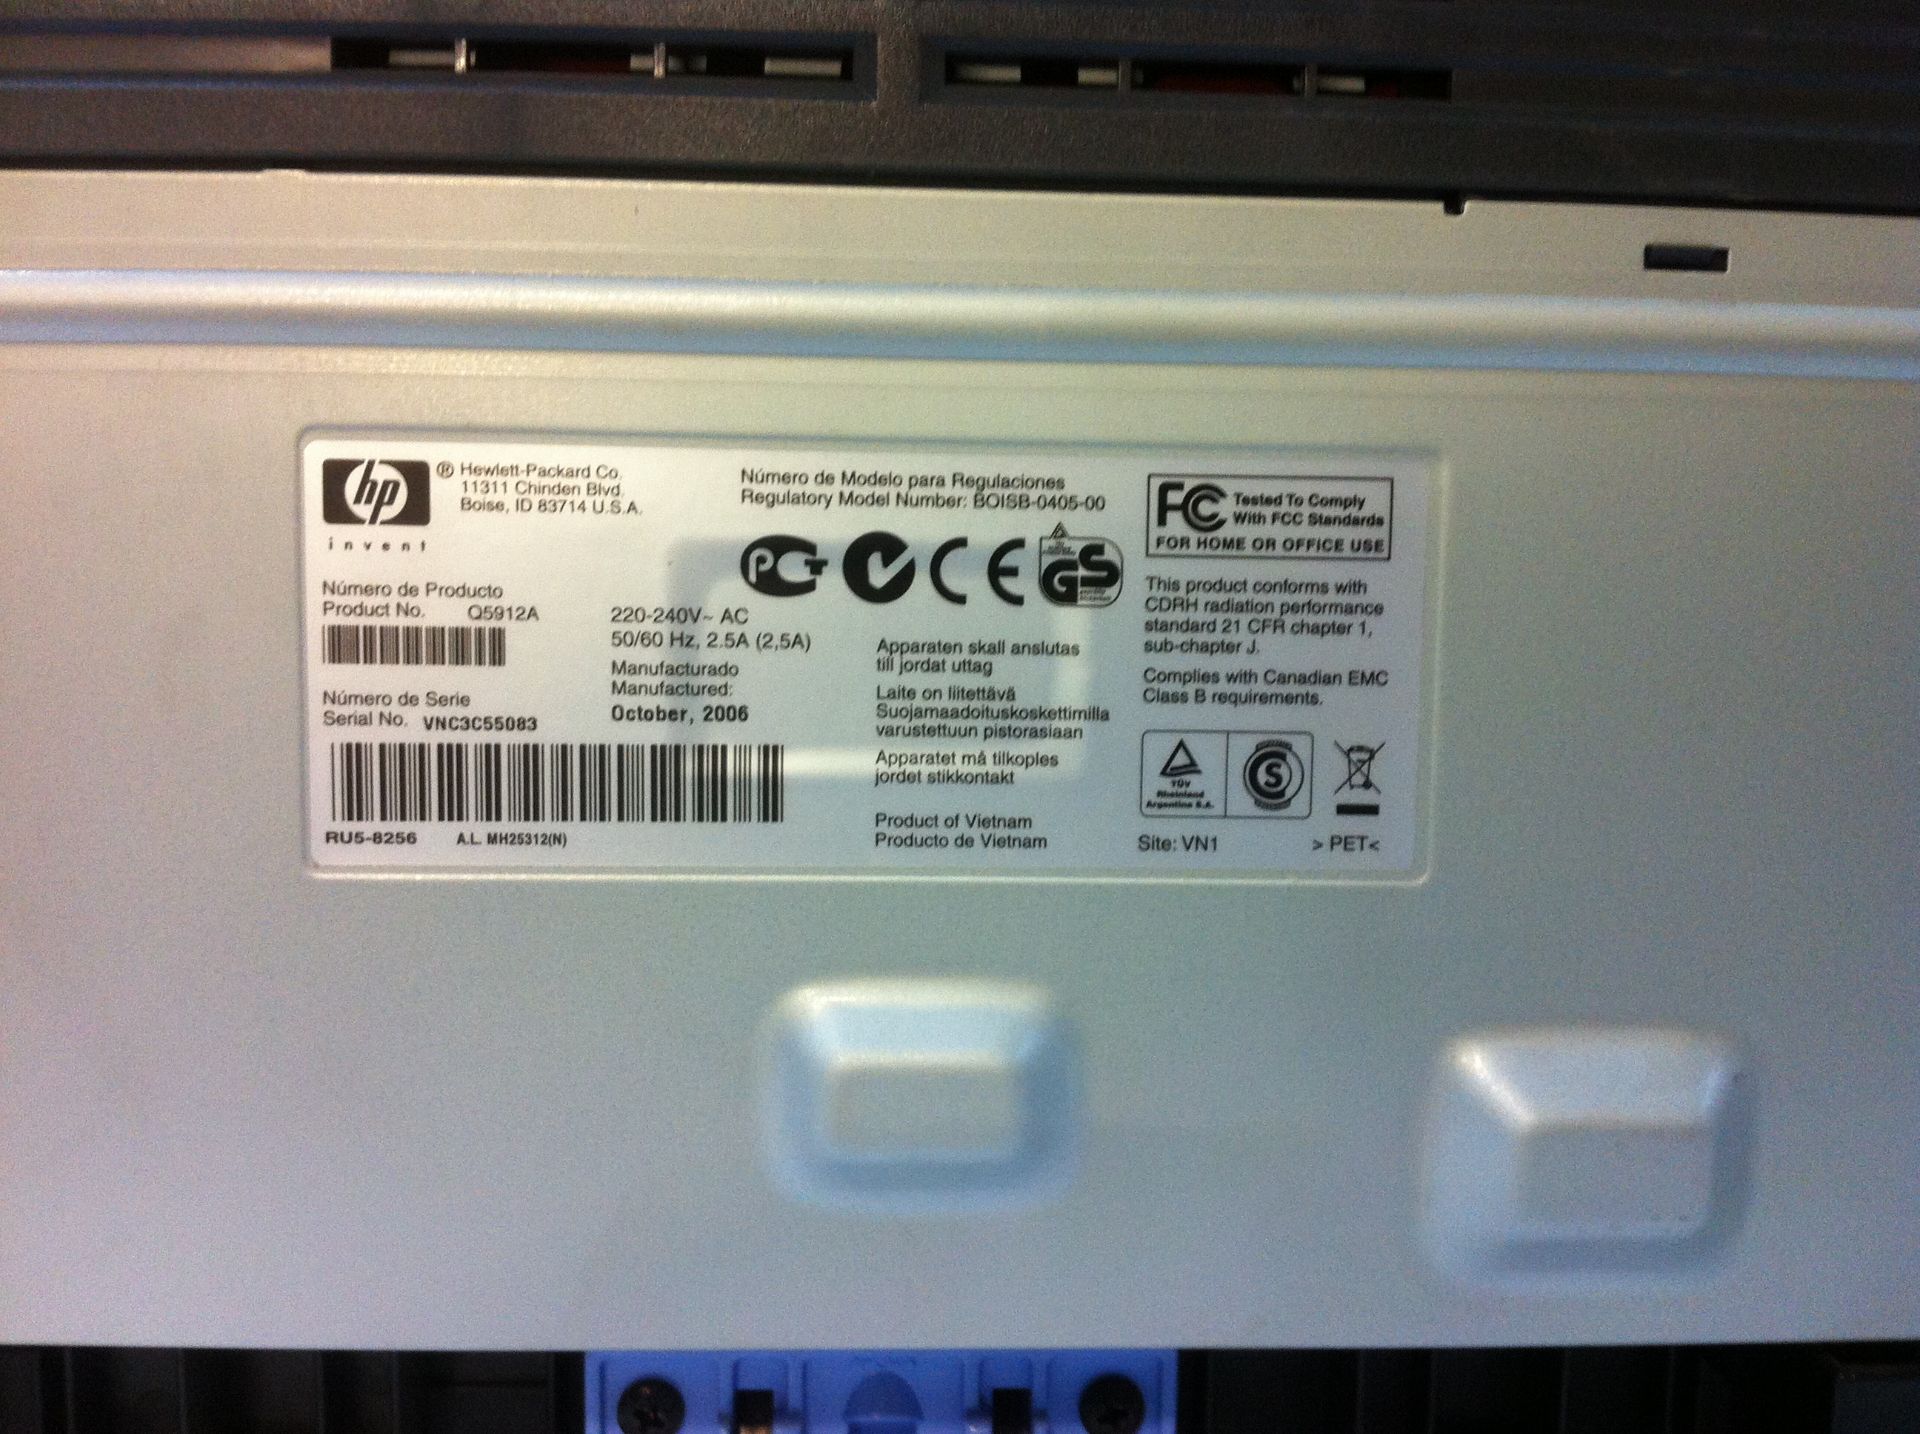 HP laserjet printer & Samsung fax machine - Image 2 of 2